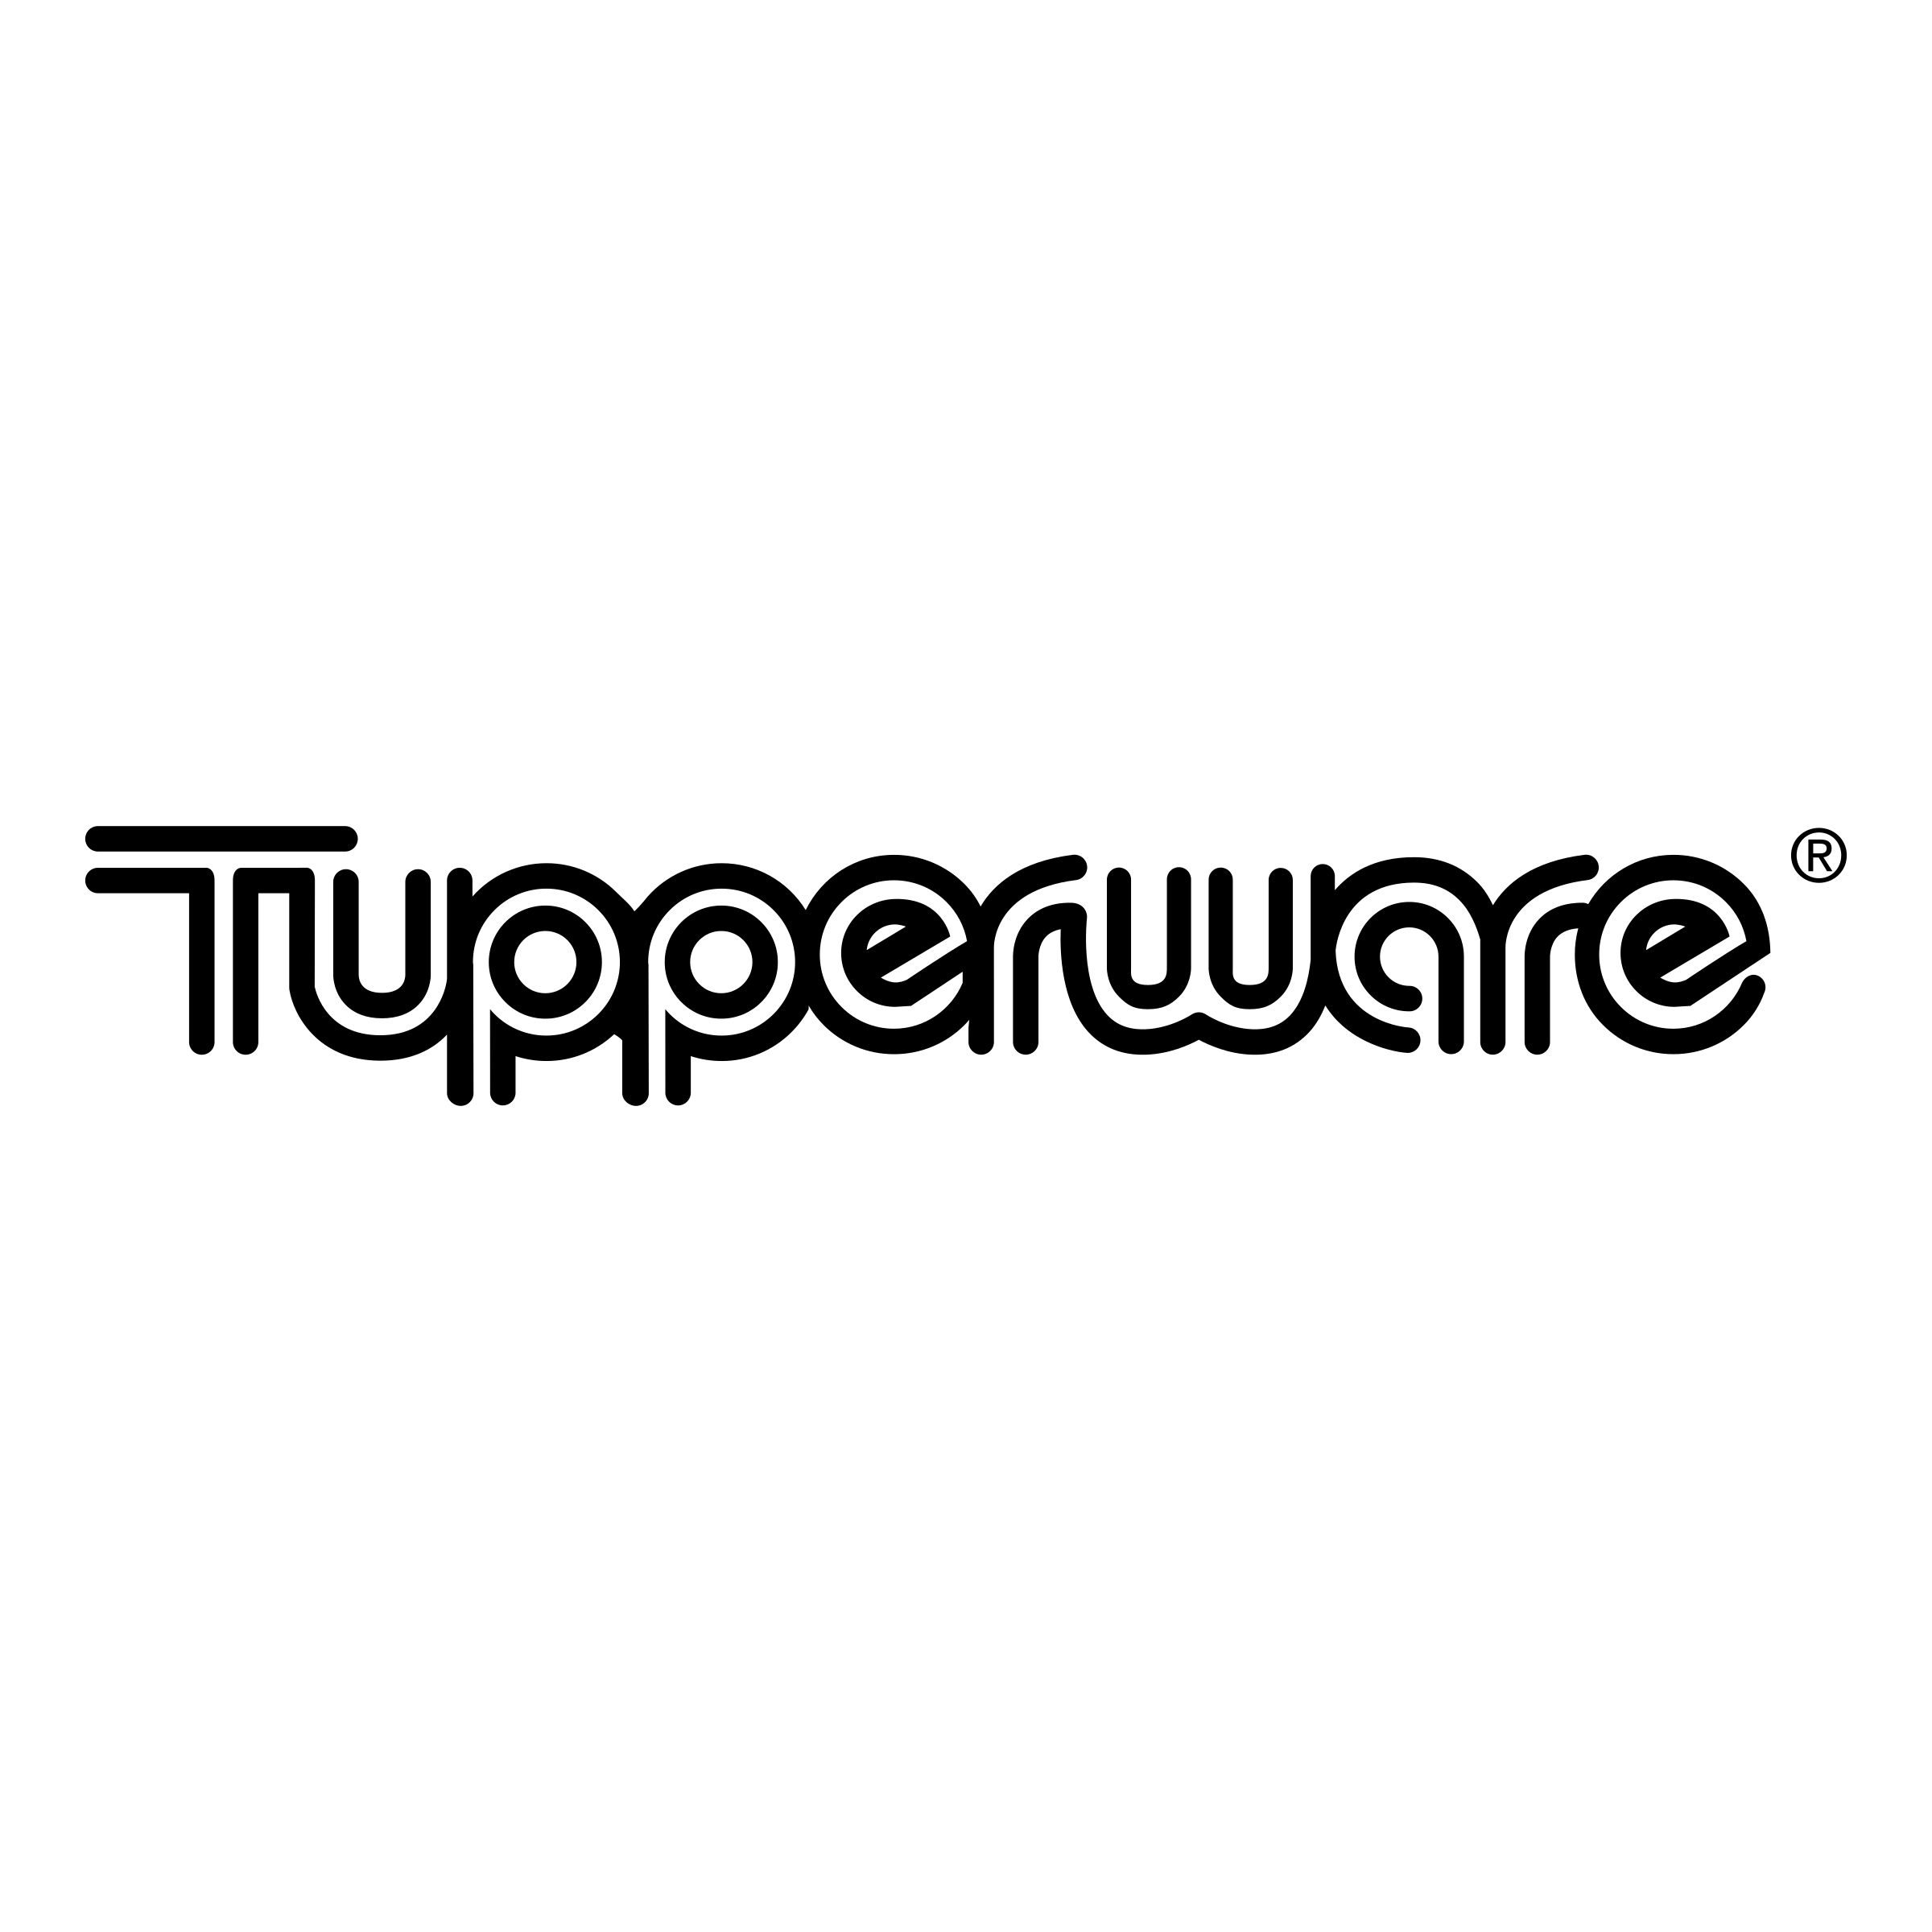 Tupperware Logo - Tupperware Logo PNG Transparent & SVG Vector